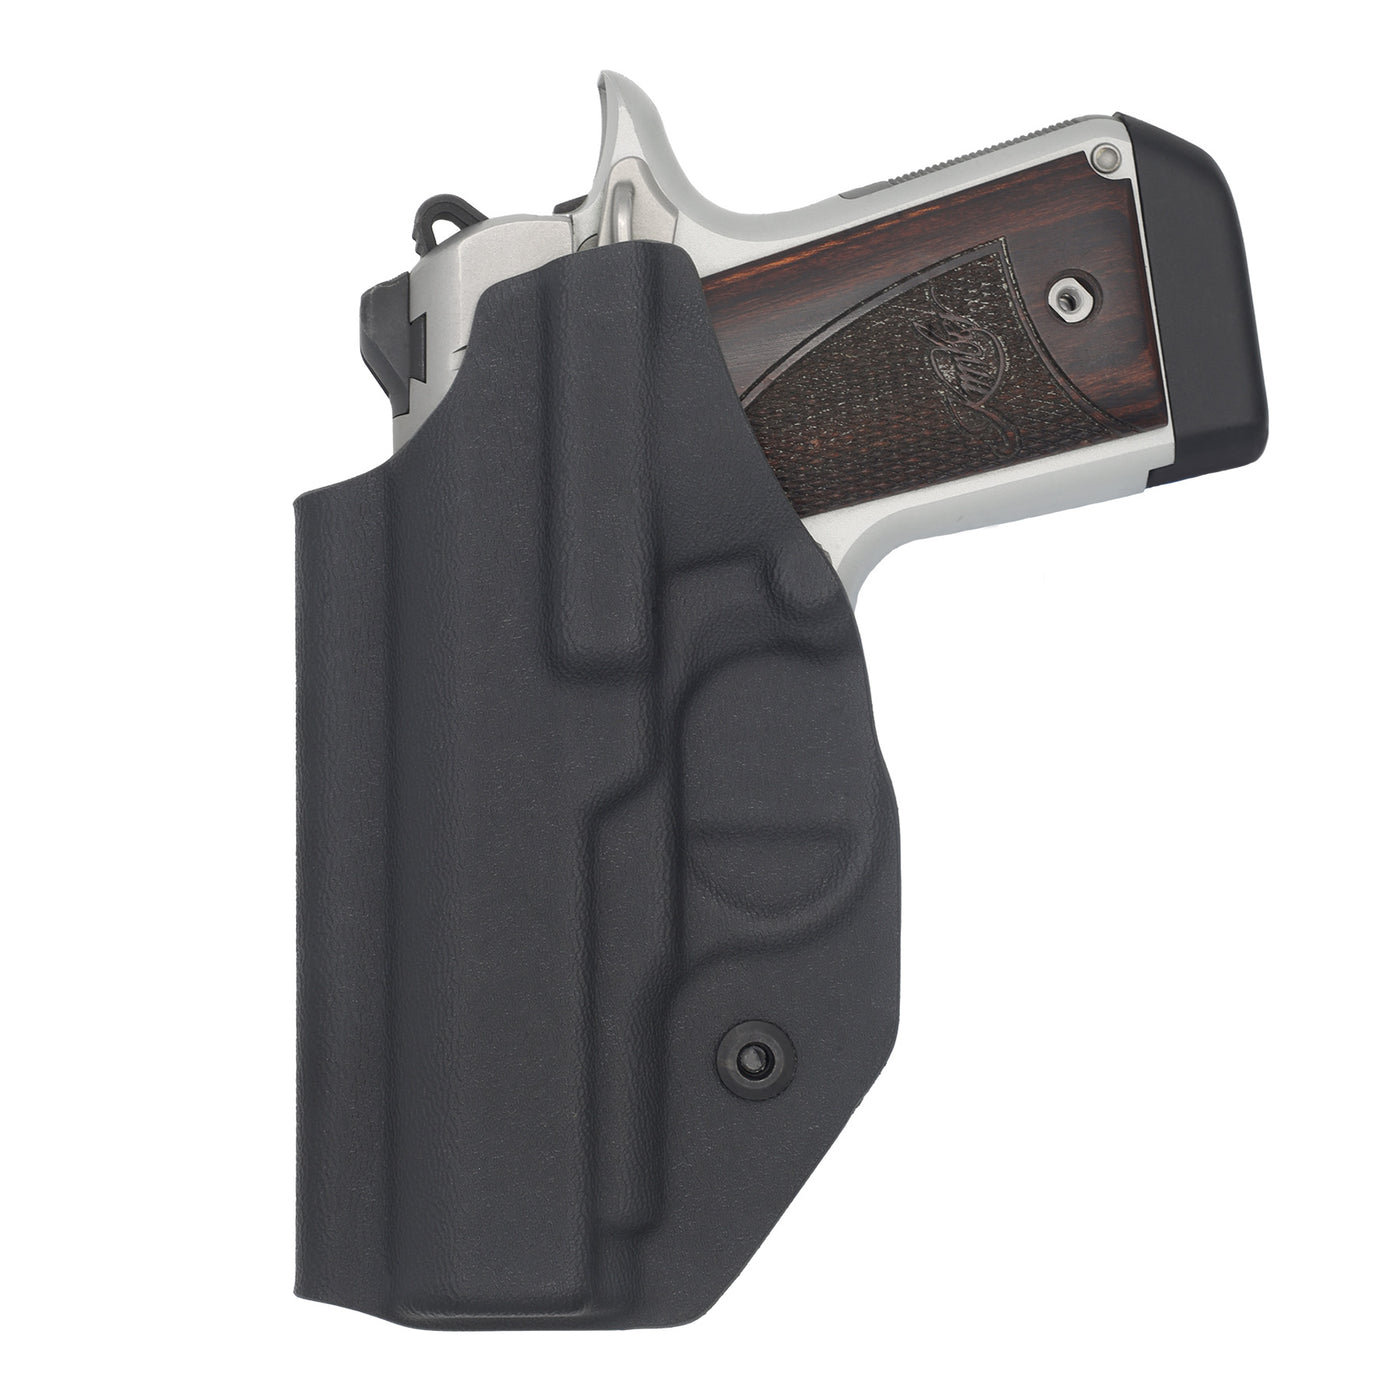 C&G Holsters Custom Covert inside the waistband kydex holster for Kimber Micro 9 in black holstered rear view